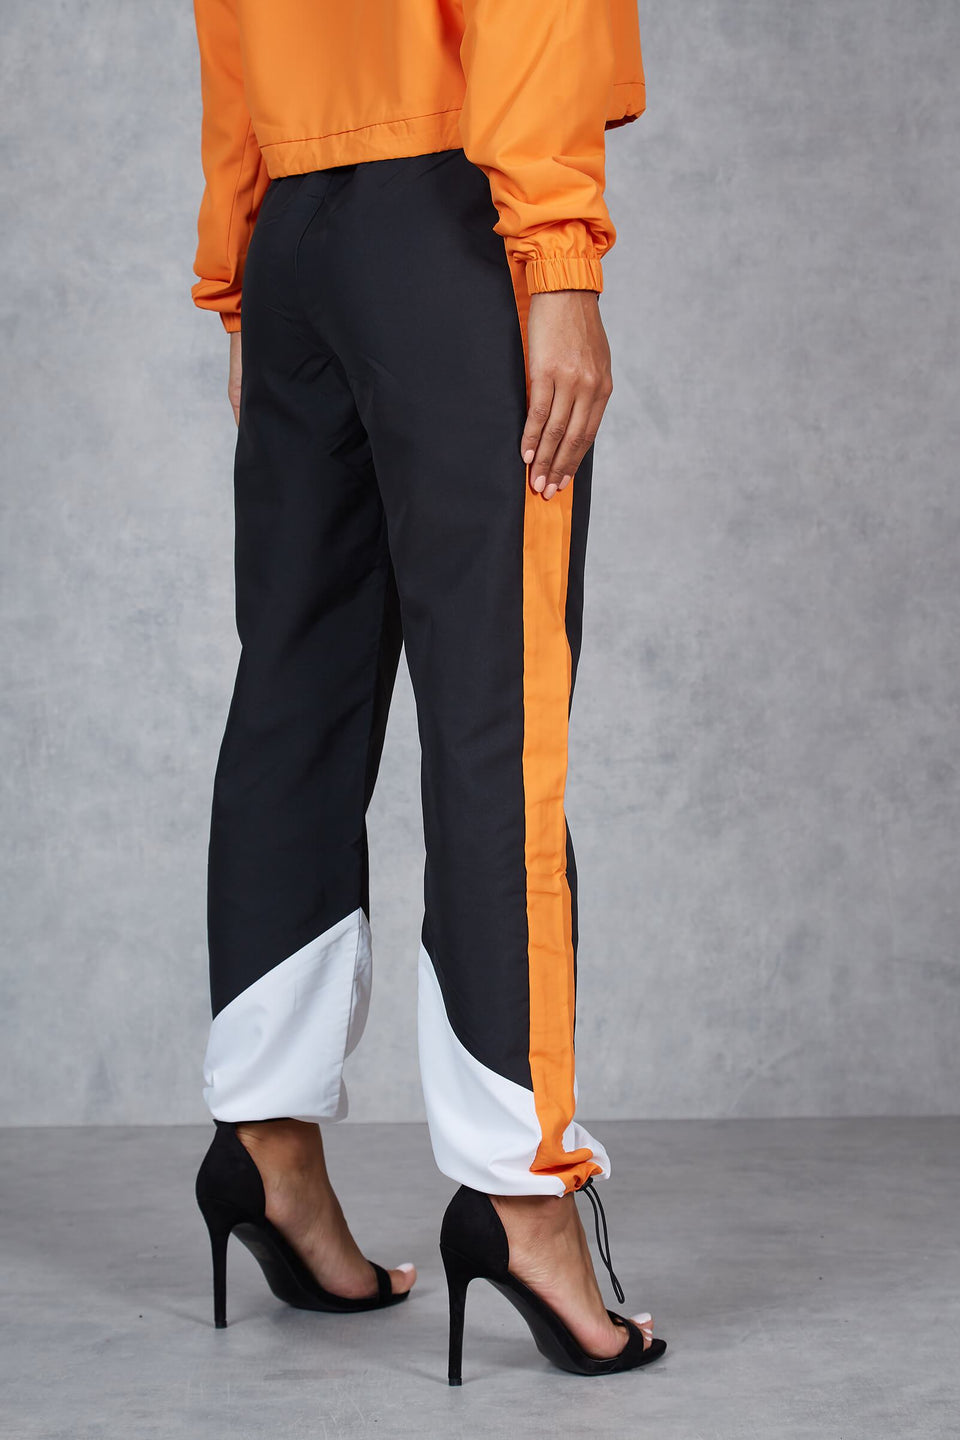 Aspen Shell Track Pants - Orange/Black/White